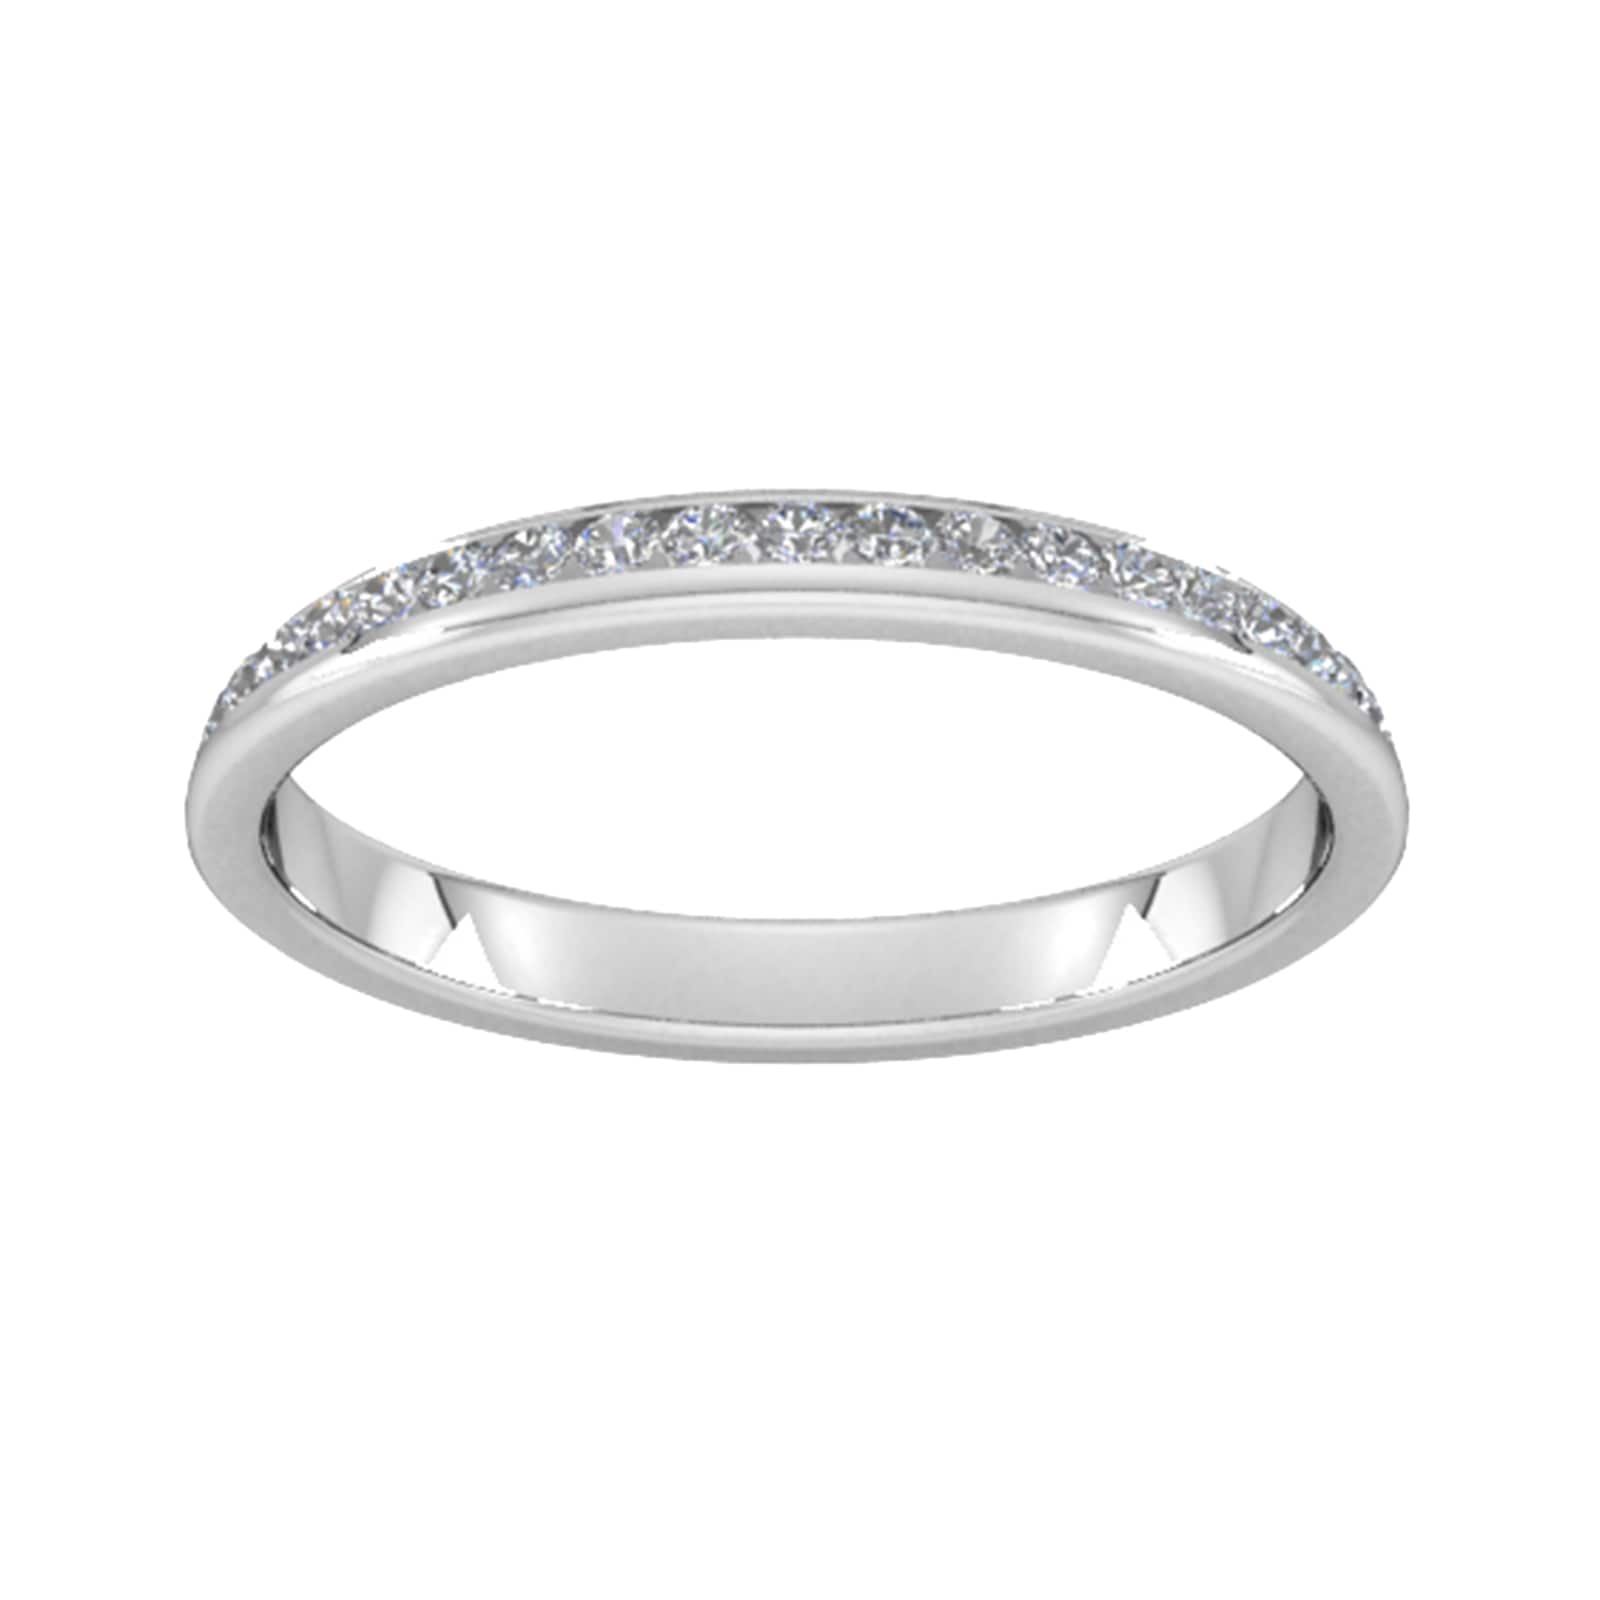 0.42 Carat Total Weight Brilliant Cut Full Diamond Set Pyramid Style Wedding Ring In Platinum - Ring Size M